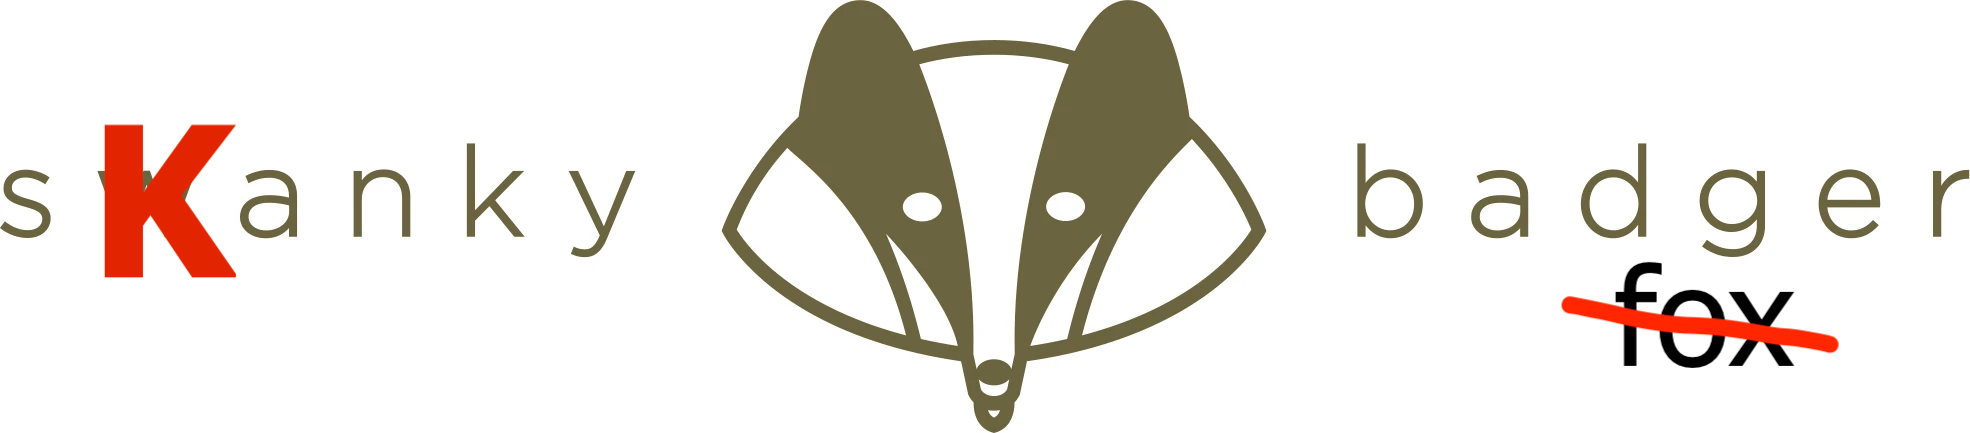 856725476_skanky-fox-logo.png